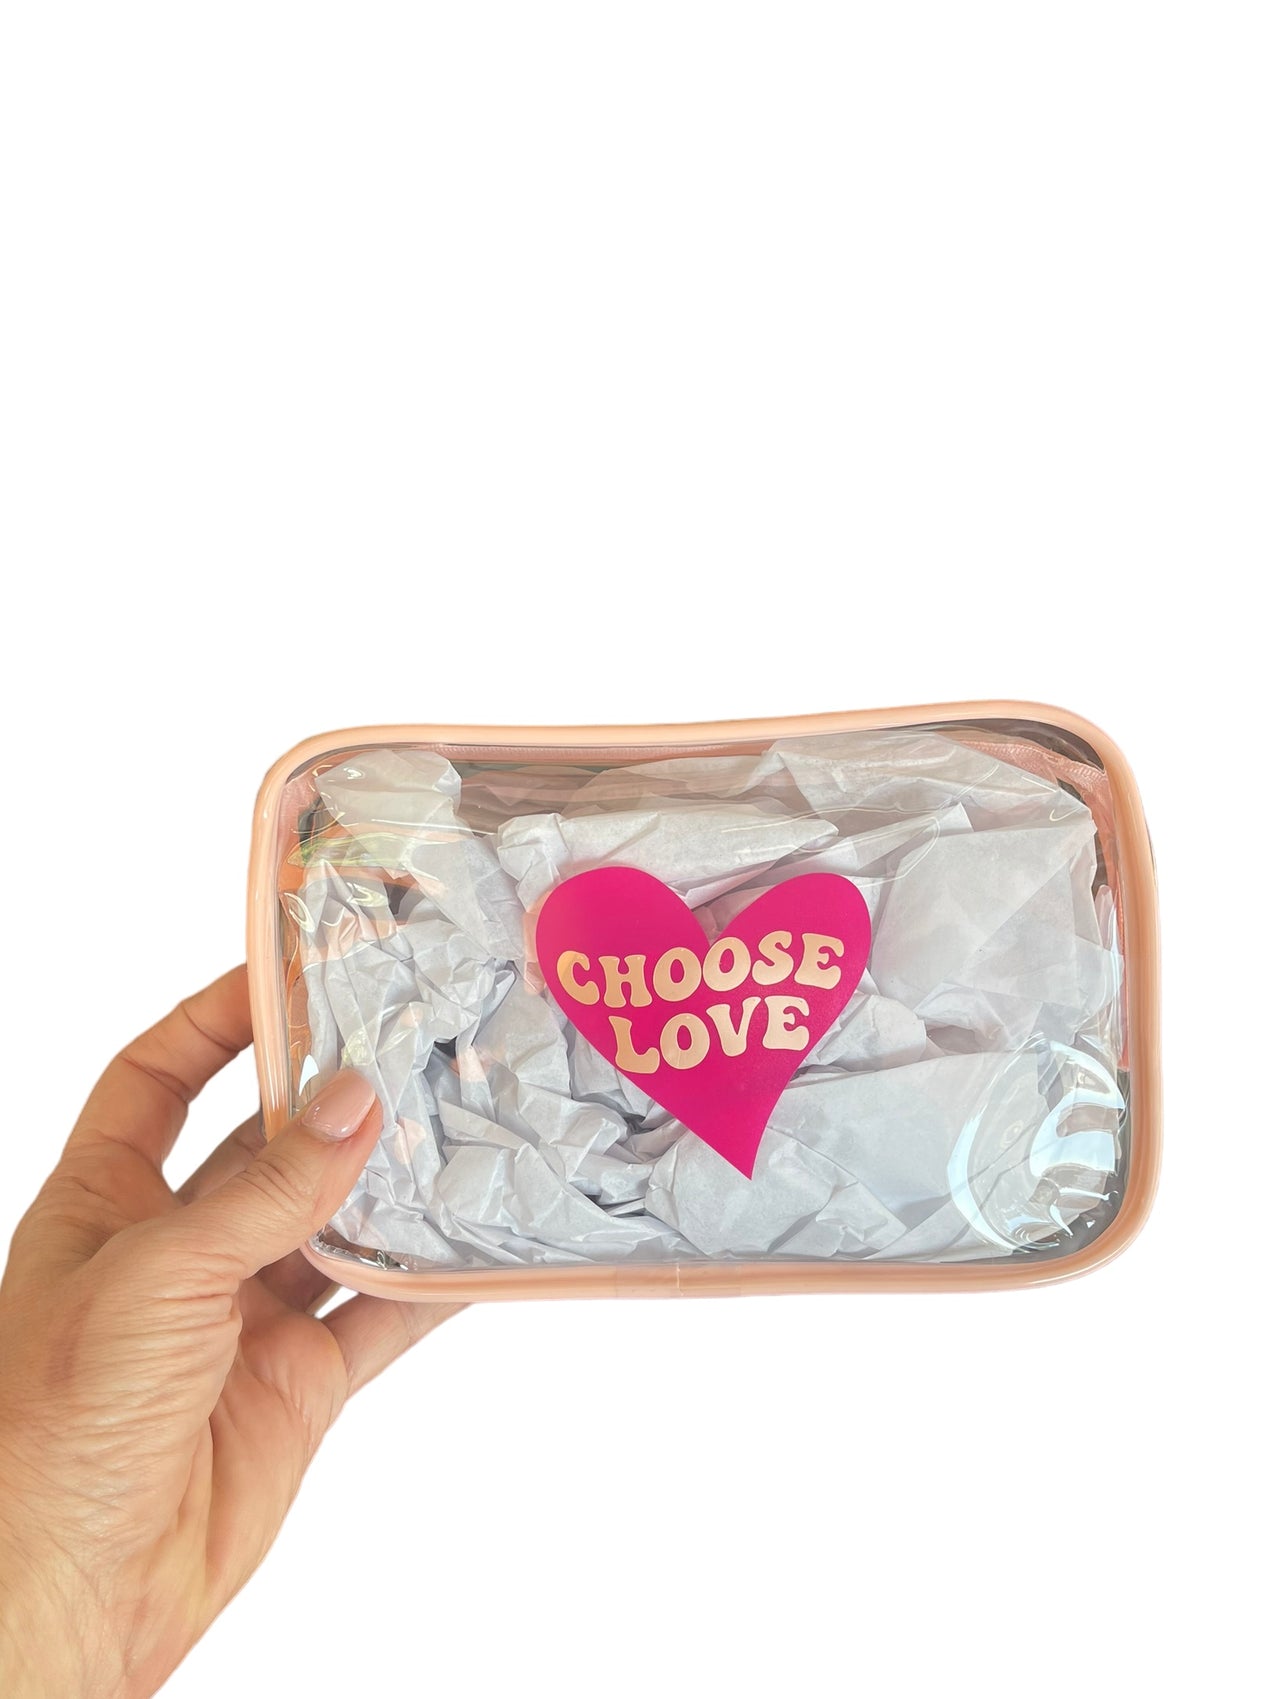 Choose love clear cosmetic bag